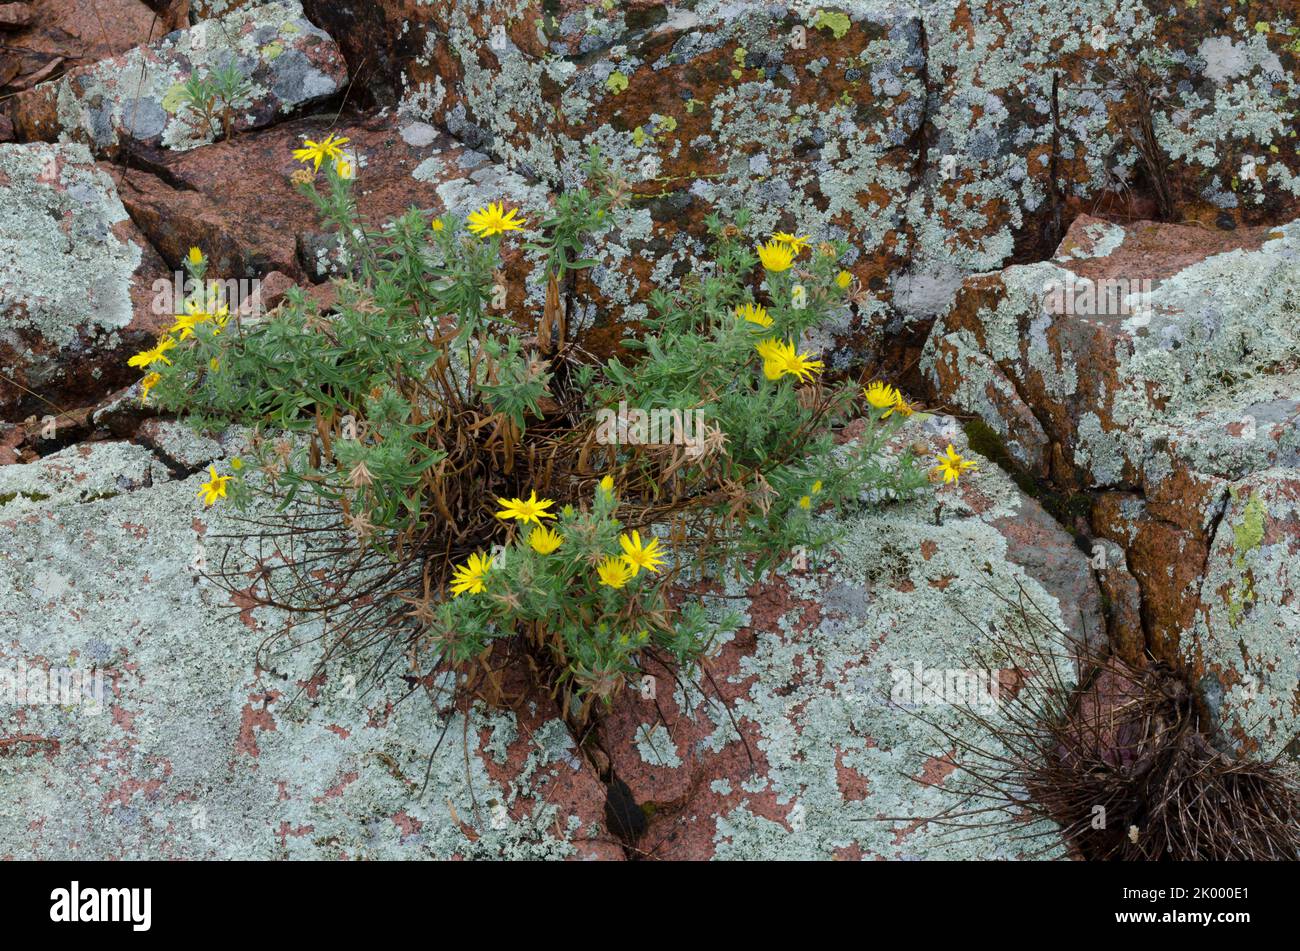 Stiffleaf False Goldenaster, Heterotheca stenophylla, growing among Lichen Covered Rocks, Acarospora contigua (yellow), Xanthoparmelia sp. (gray) Stock Photo